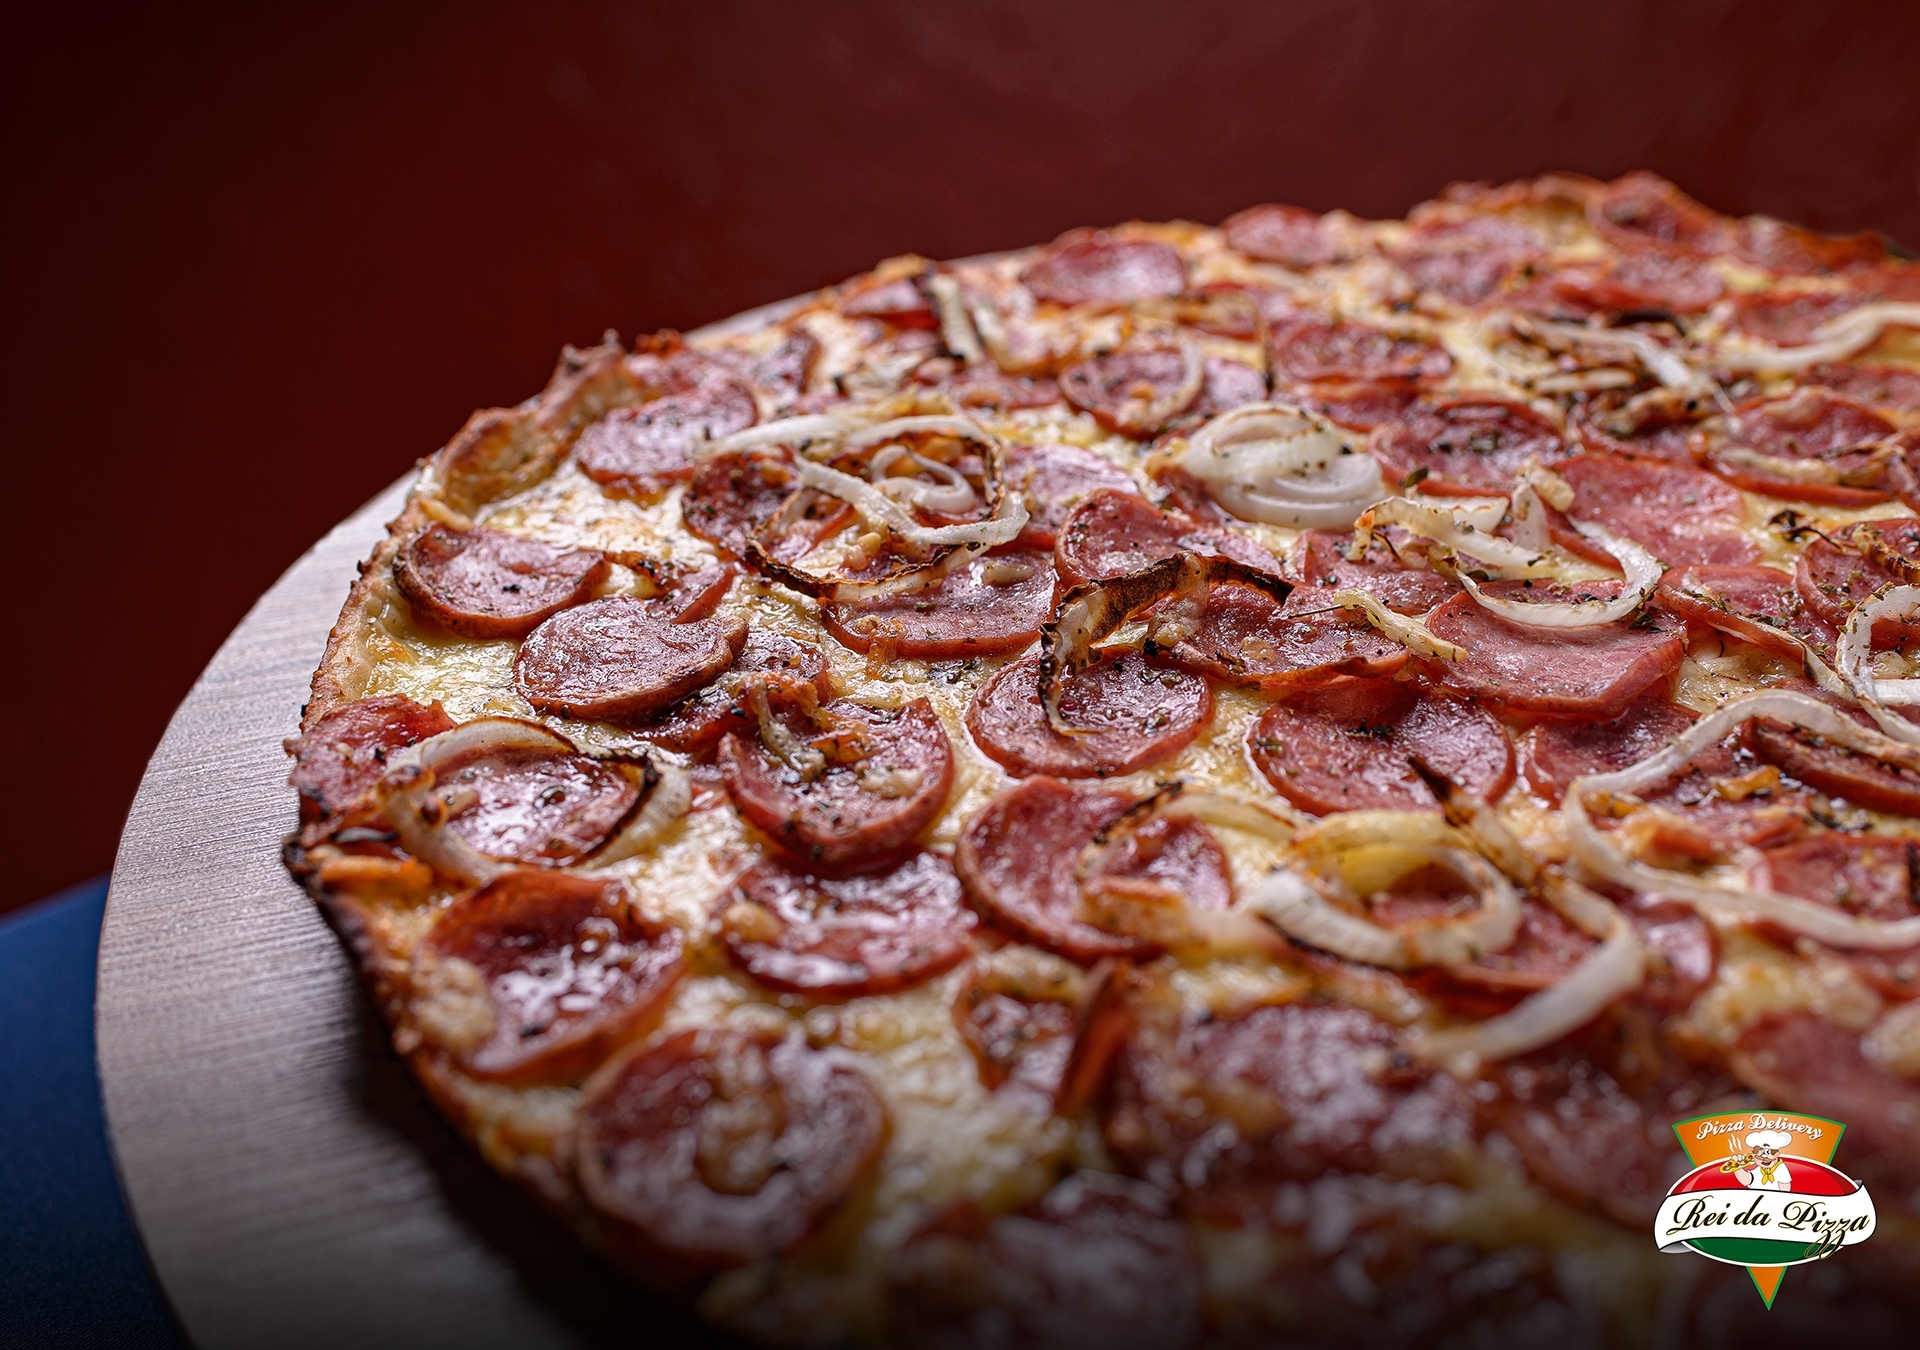 #pizza 🍕 de #calabresa da #reidapizzaczs